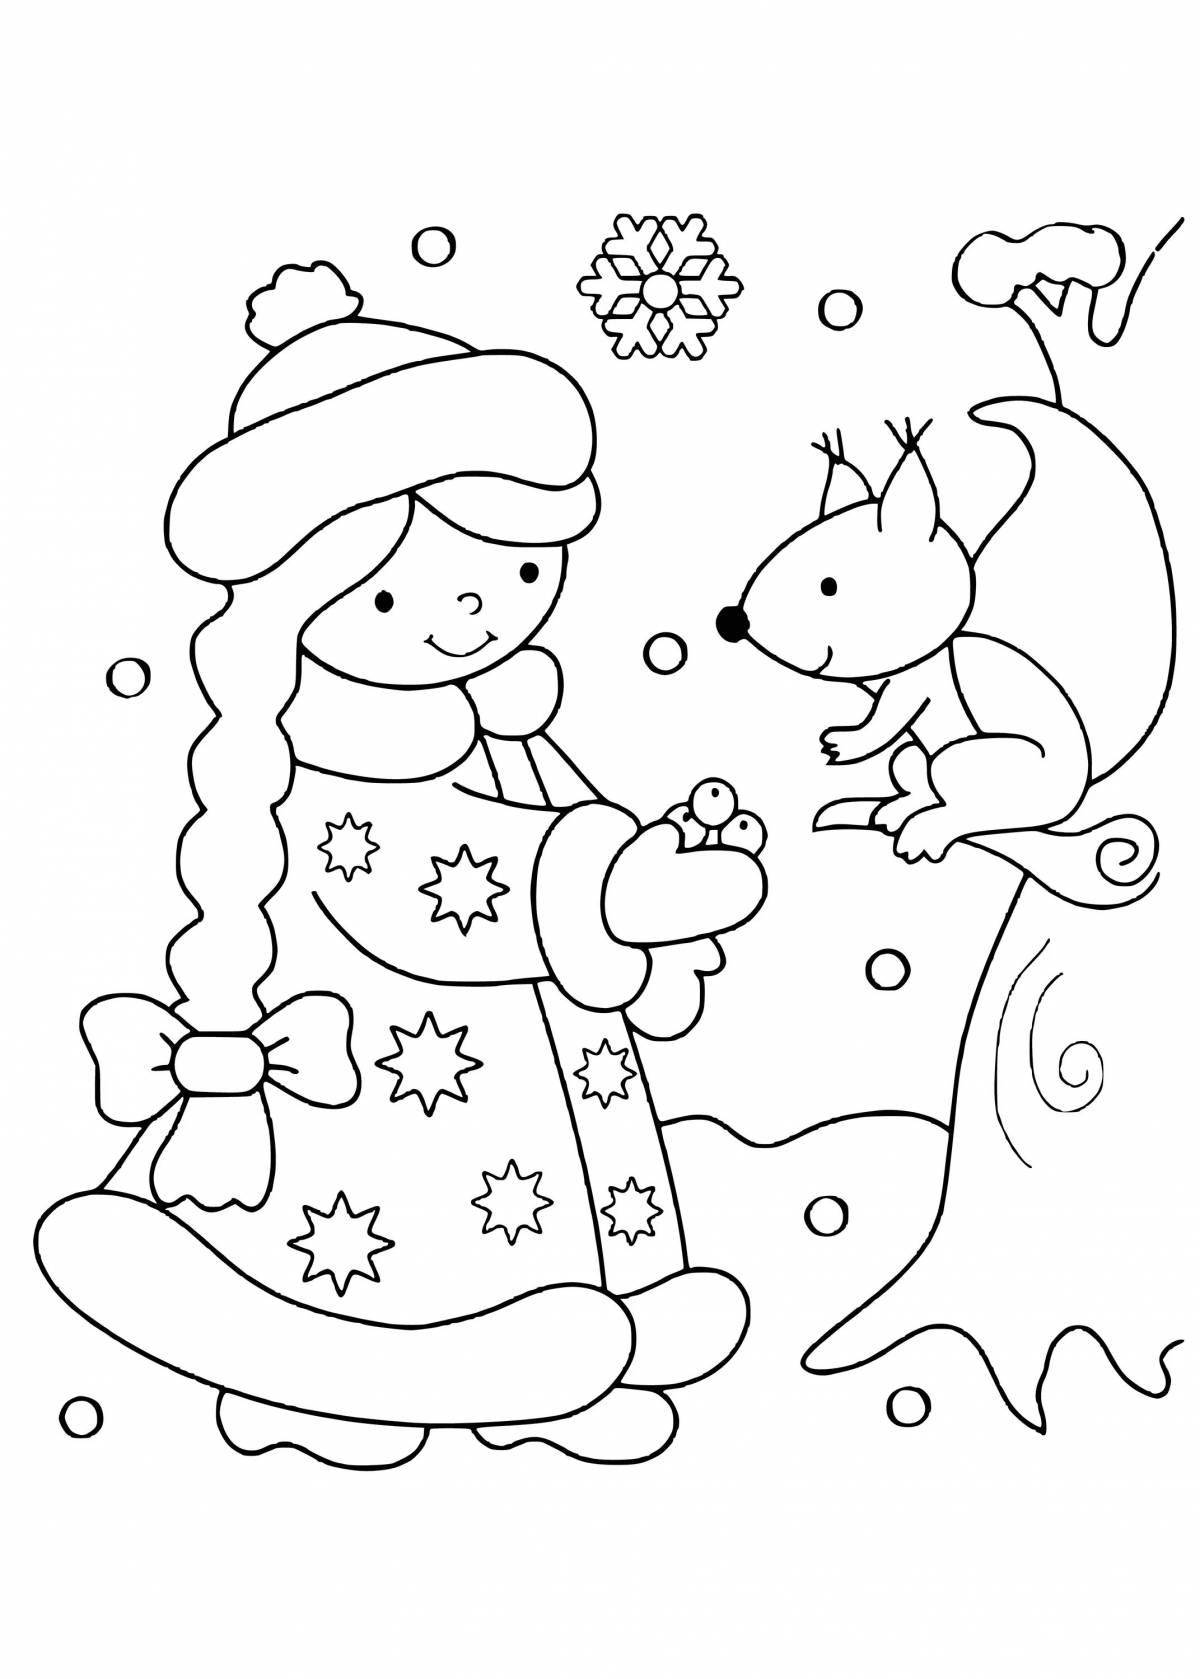 A fun Christmas coloring book for preschoolers